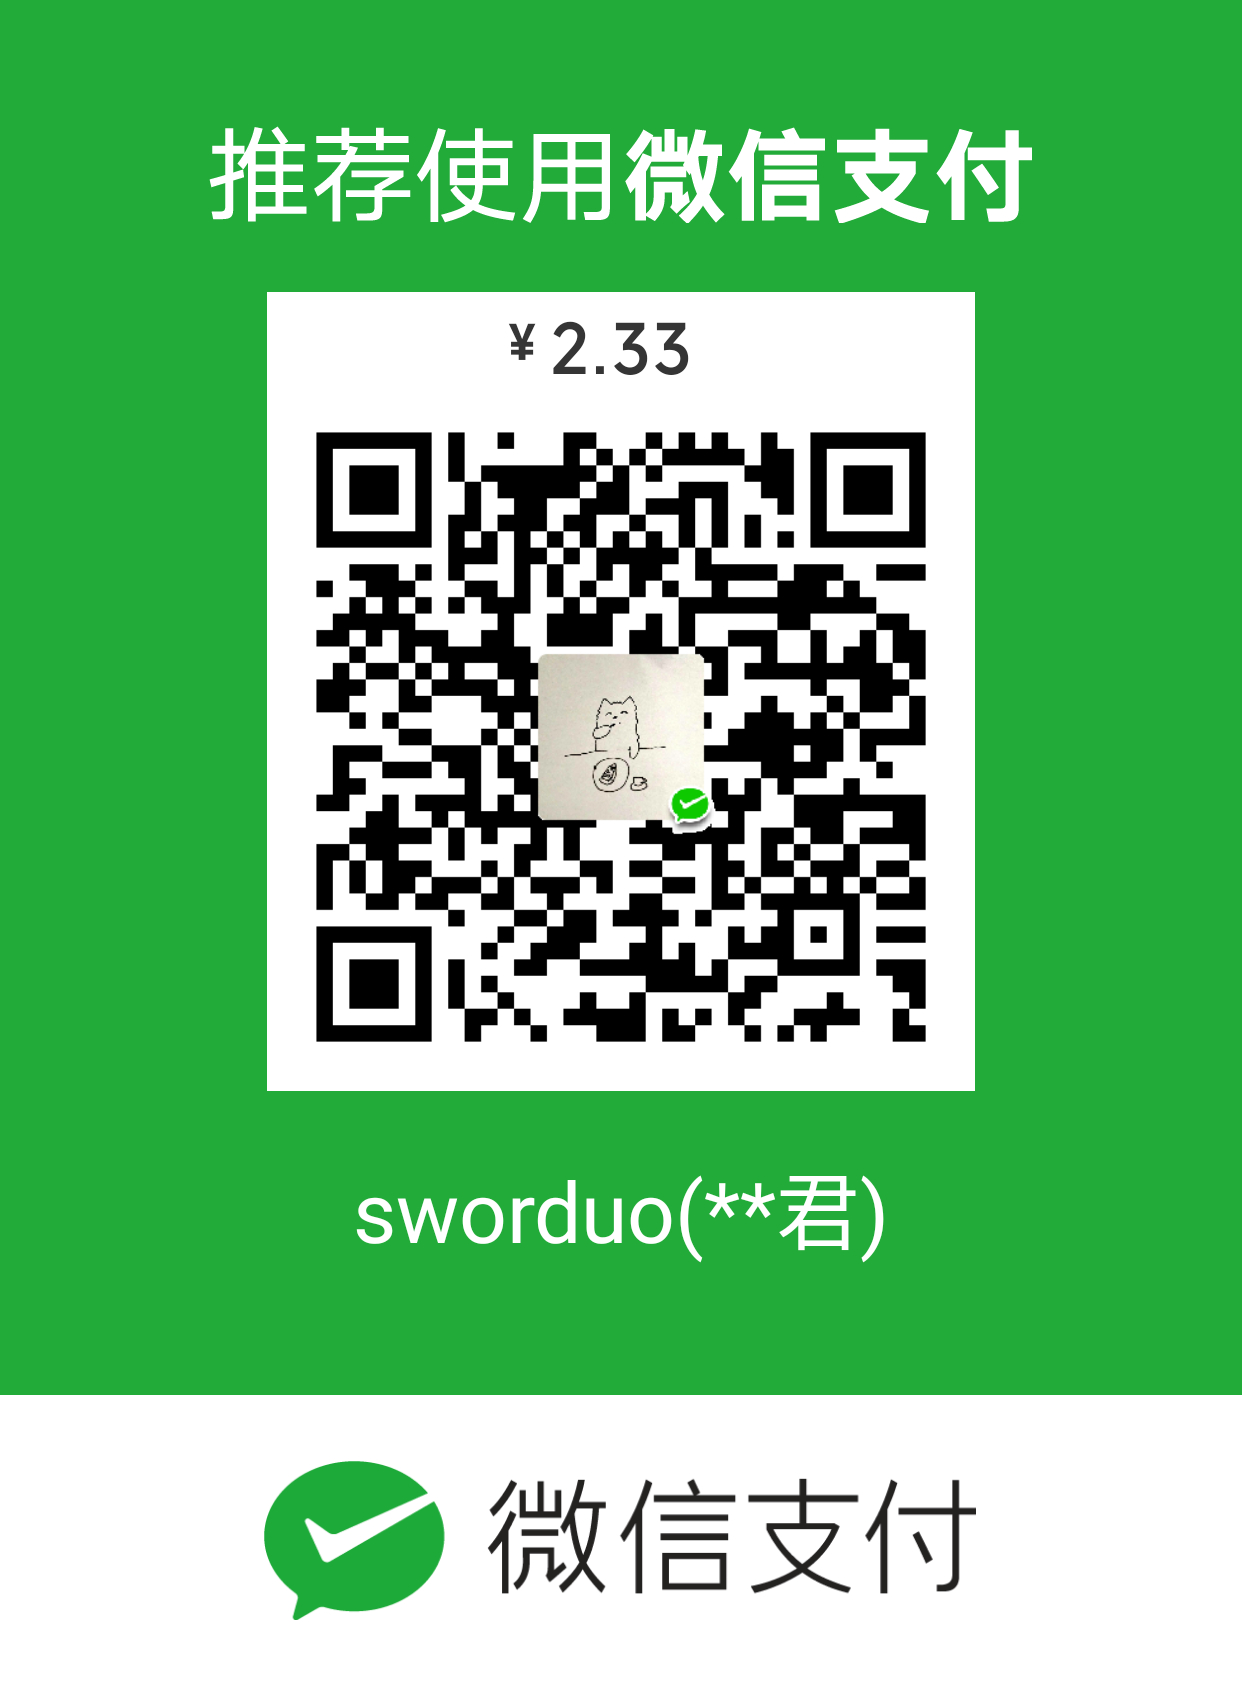 Sworduo 微信支付